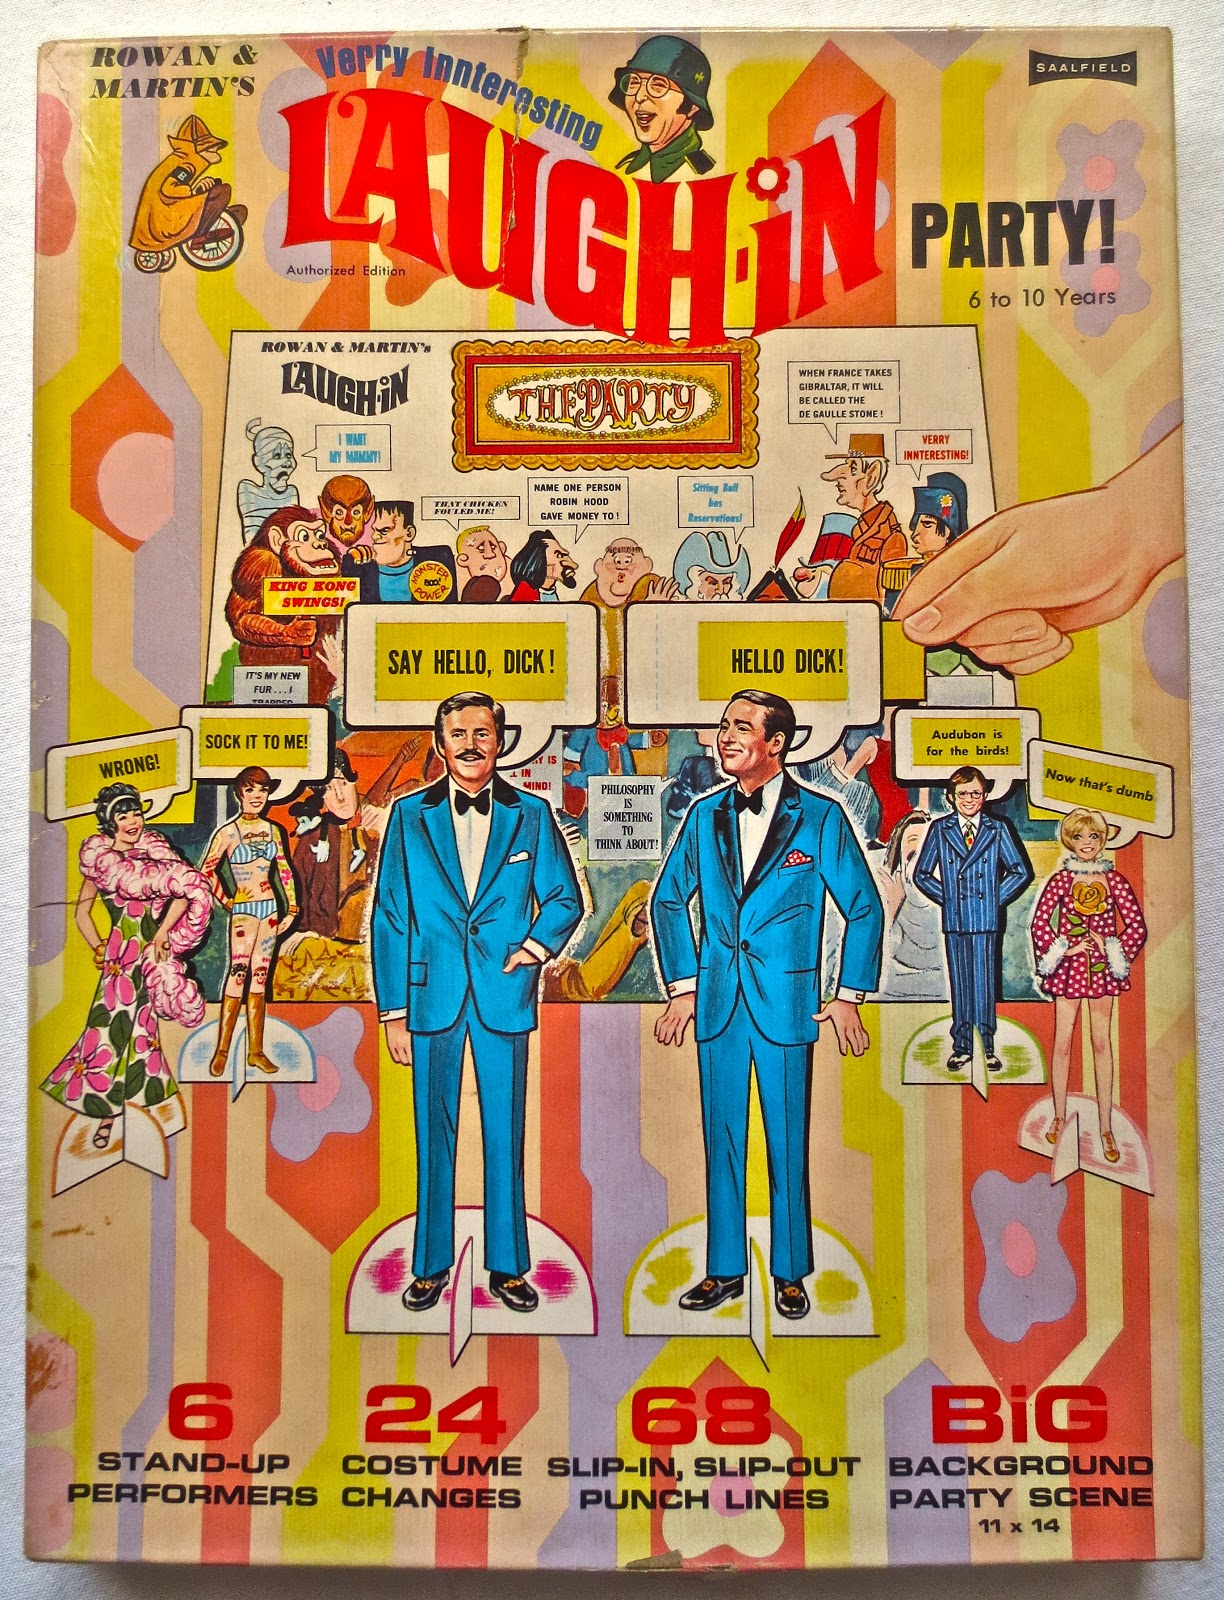 1969 Rowan & Martin's Laugh In Party Toy 1960s Vintage Cardboard Paper Dolls 1.JPG